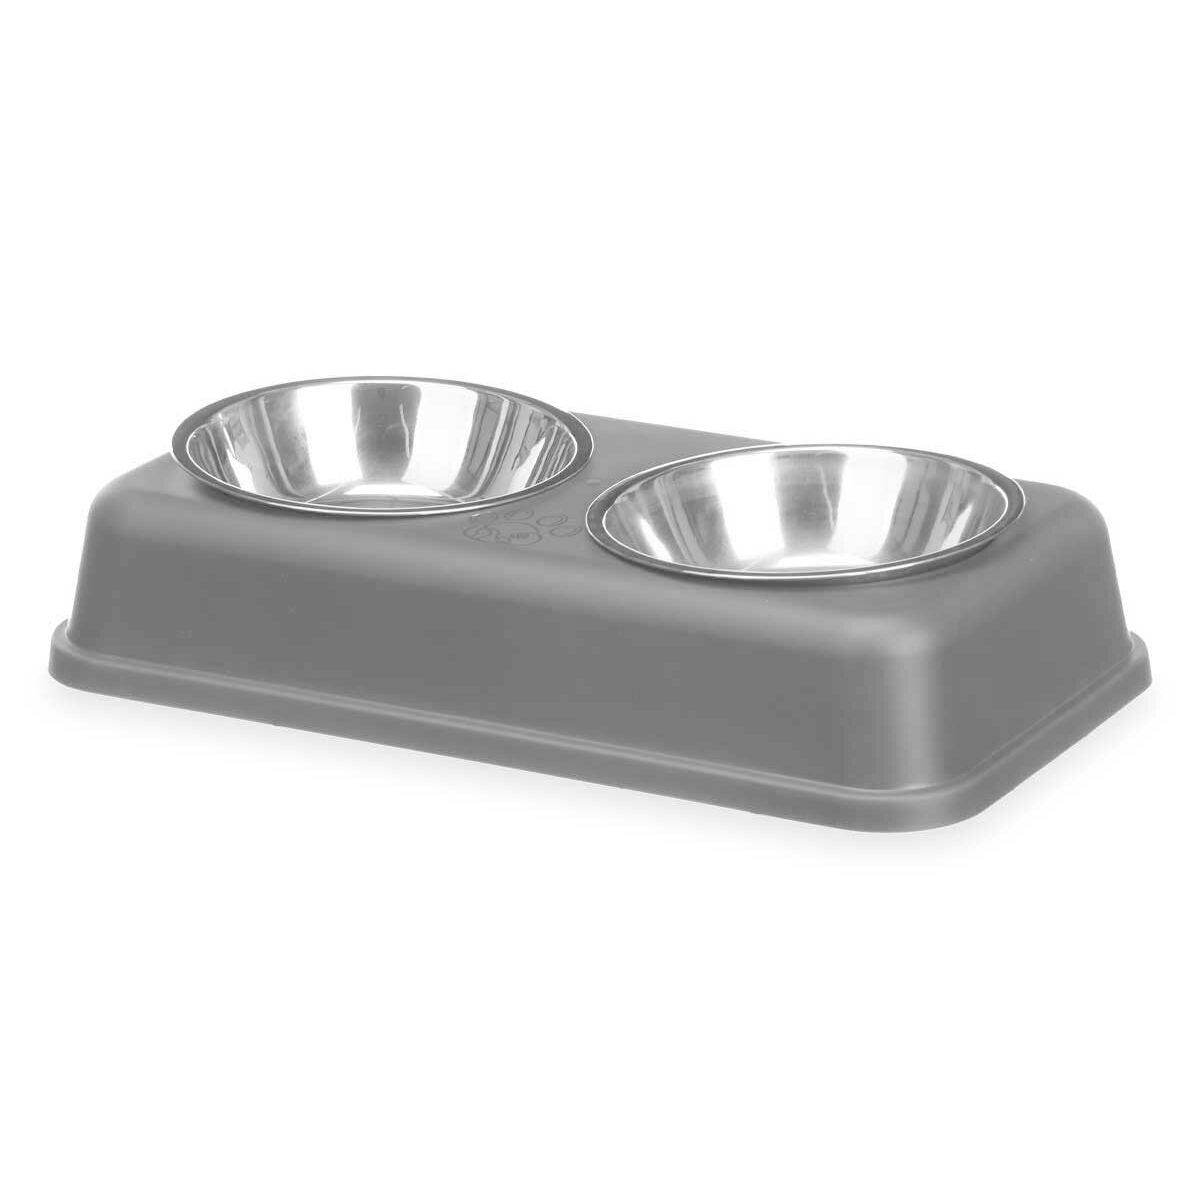 Pet feeding dish Grey Metal 35 x 7,5 x 19 cm Double (12 Units)